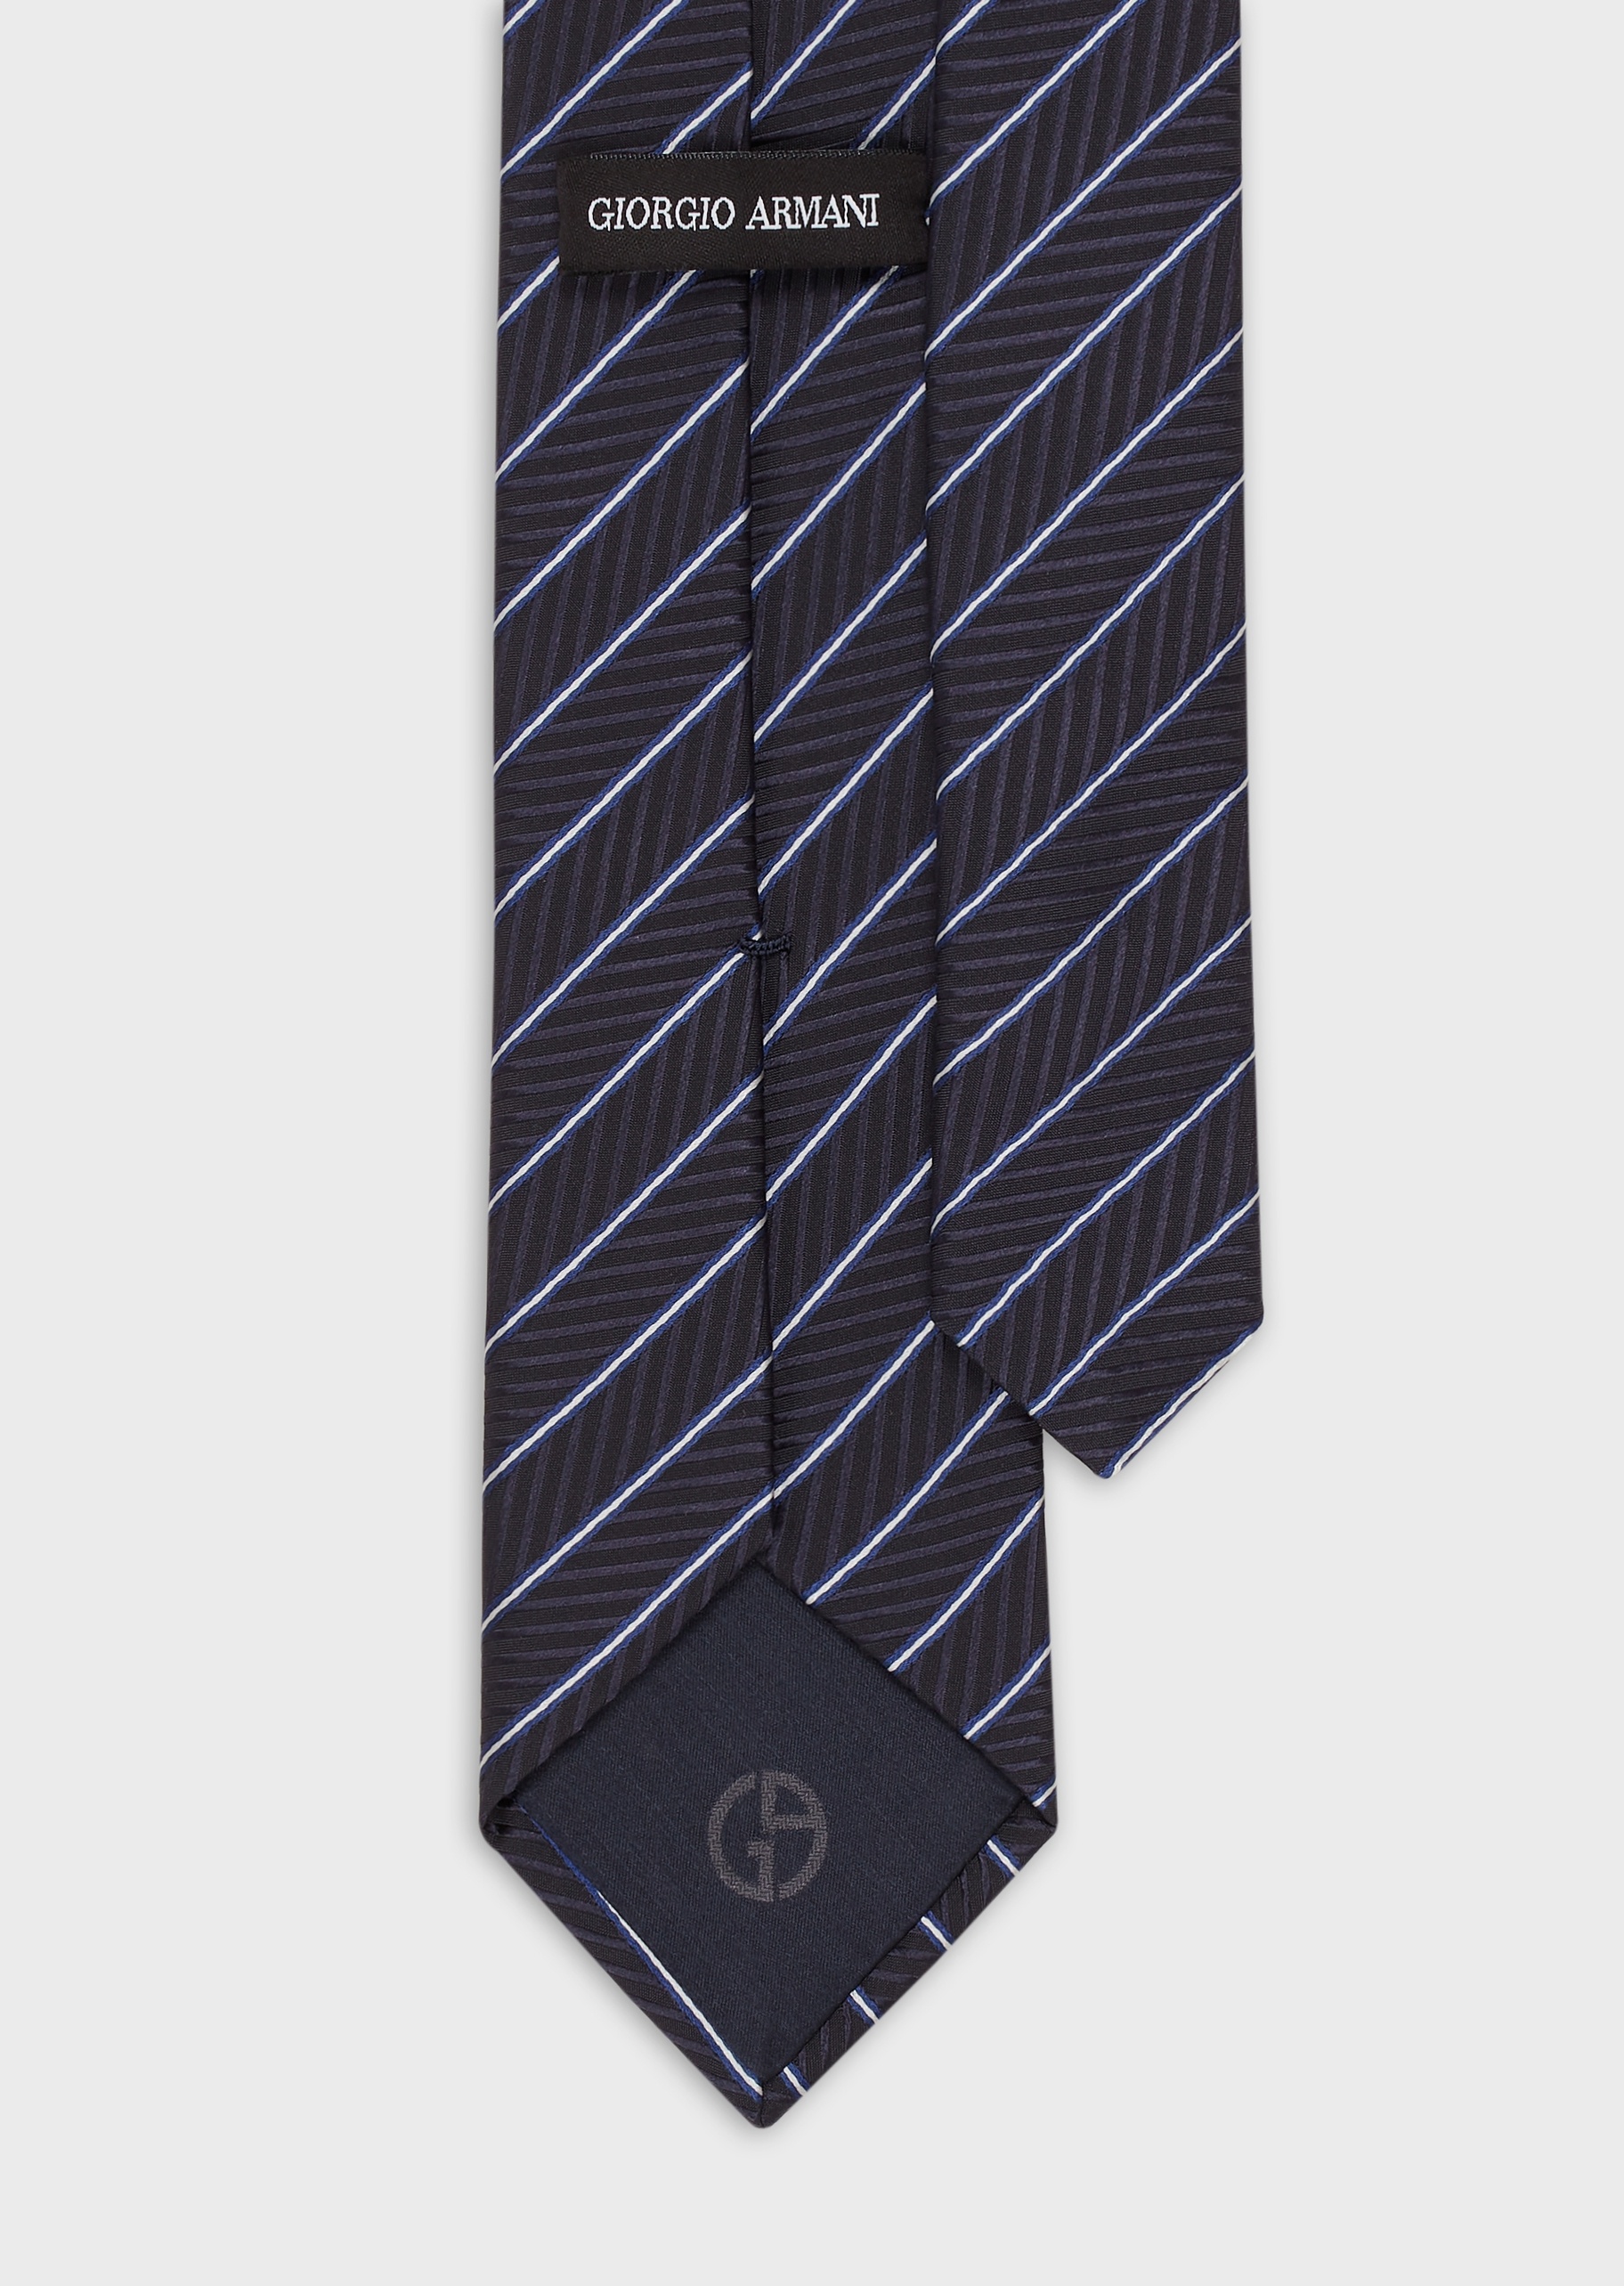 Giorgio Armani 人字图案纯真丝领带